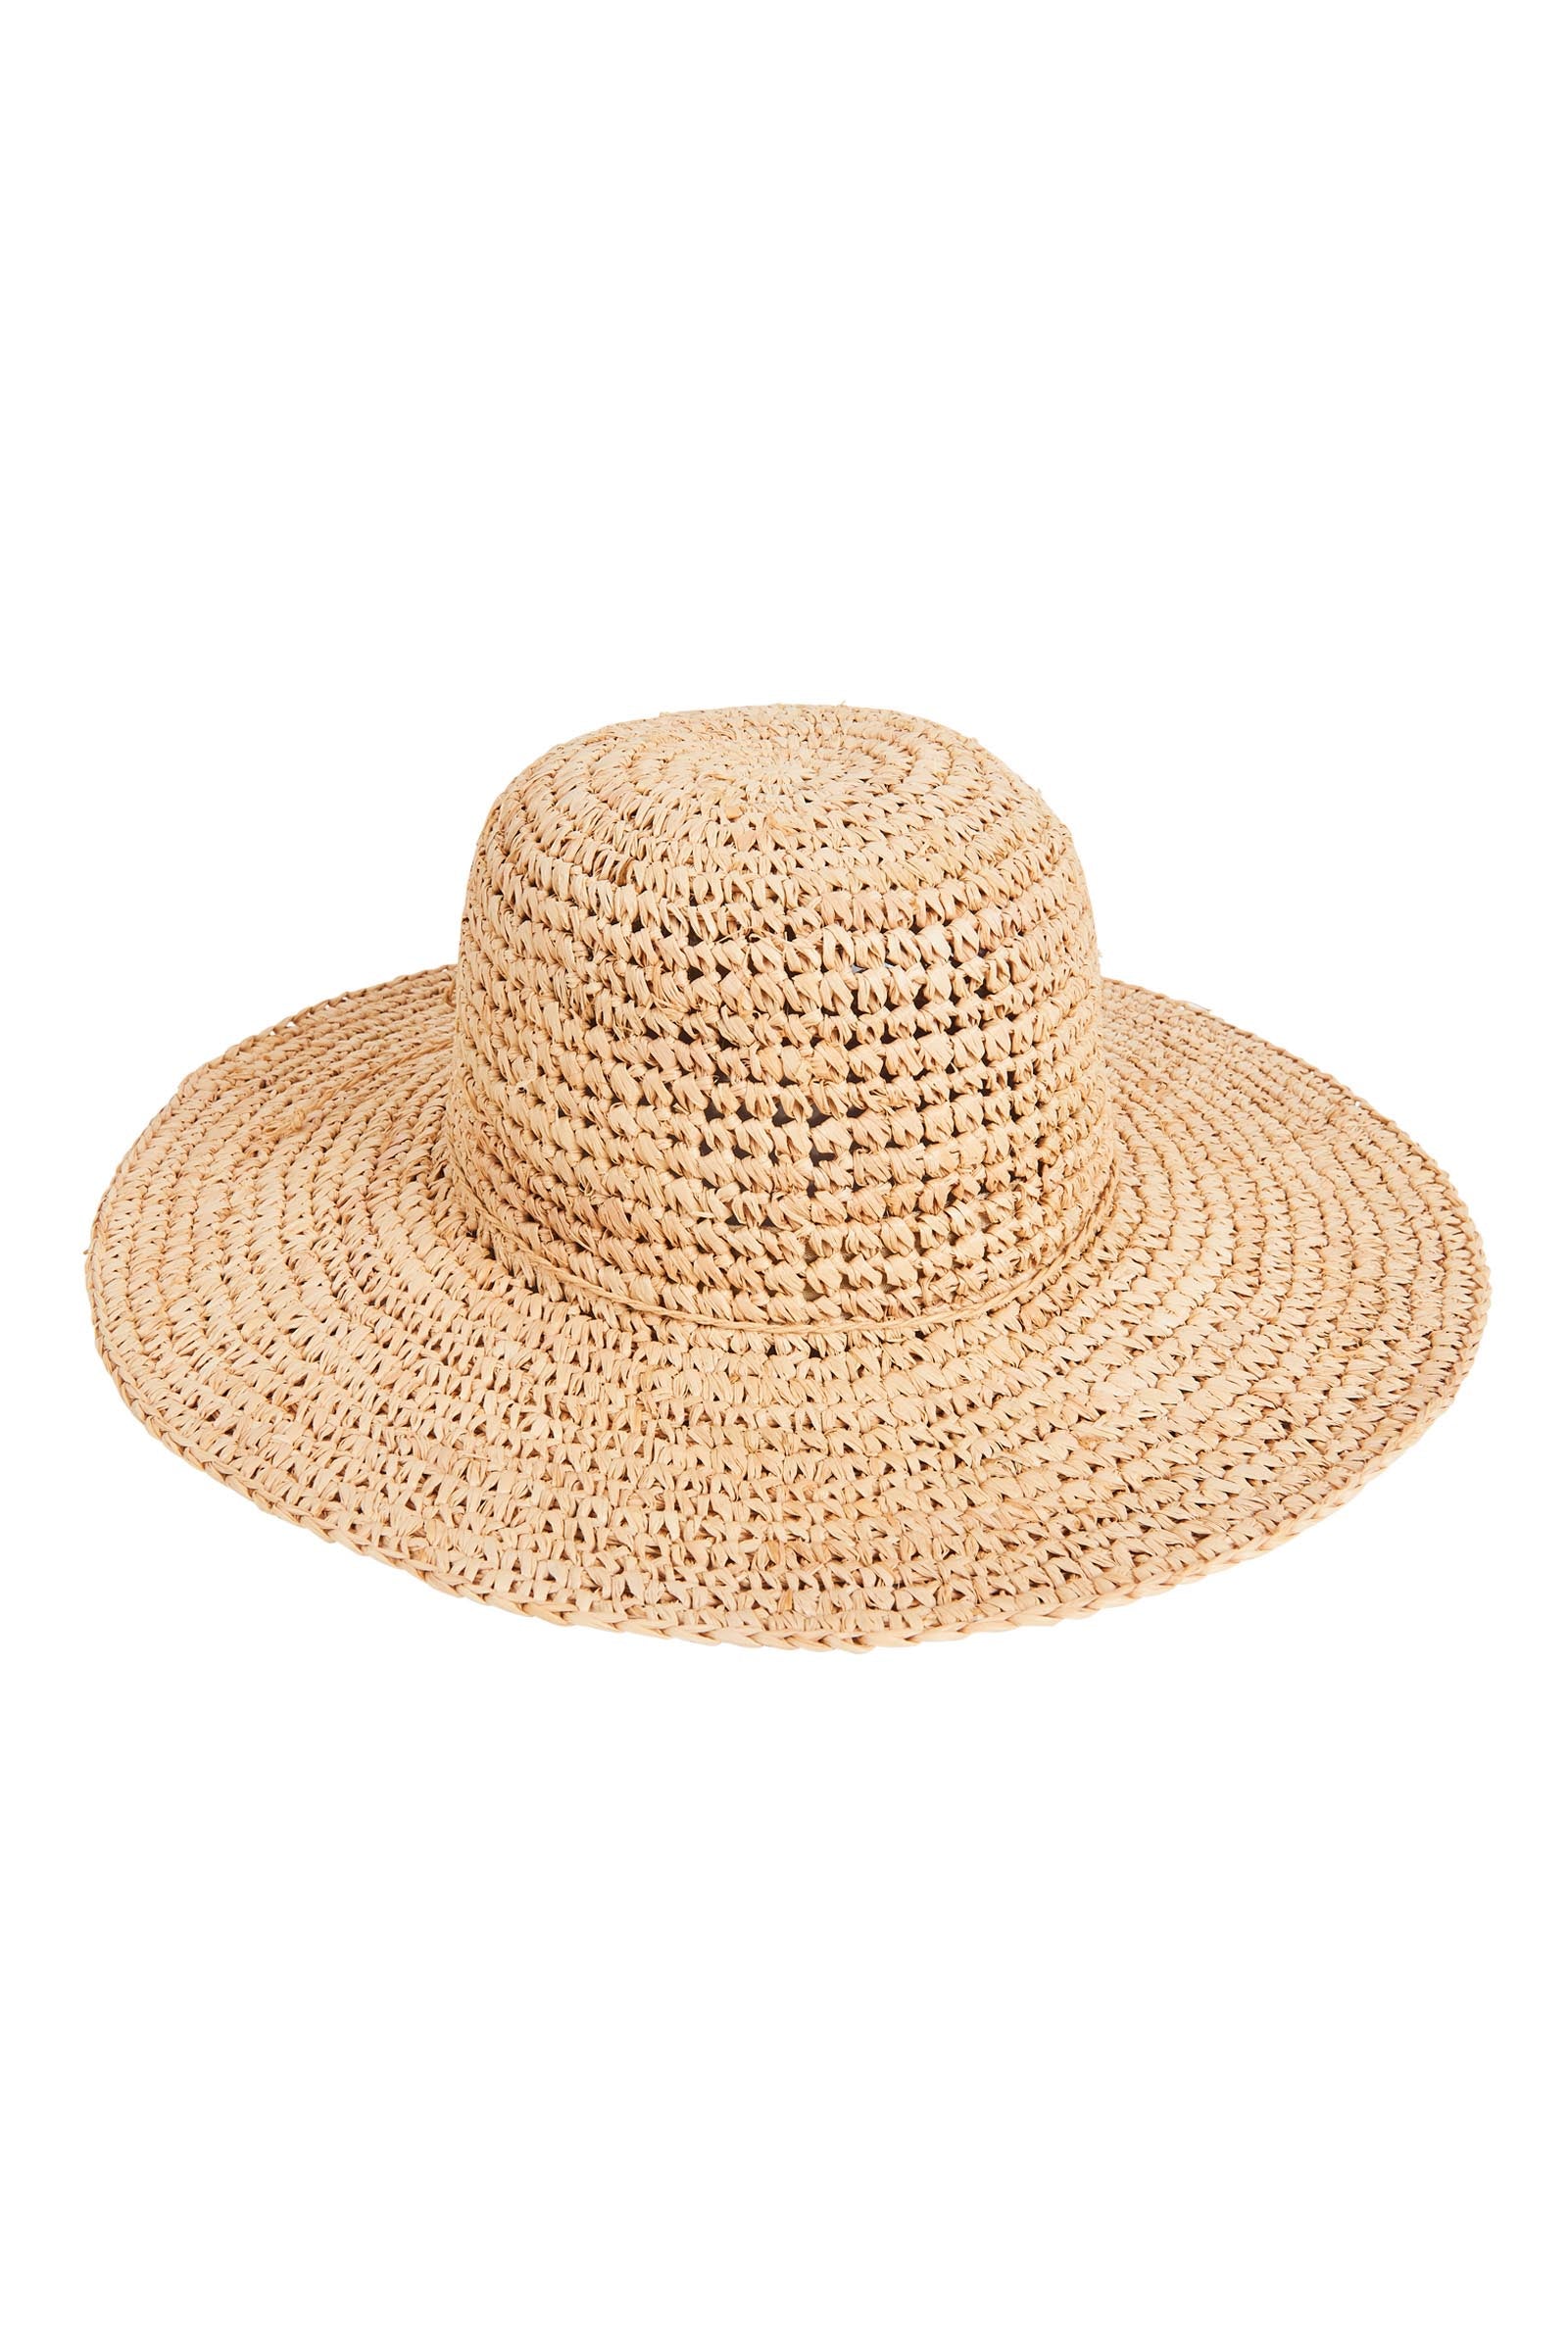 Marra Hat - Natural - eb&ive Hat